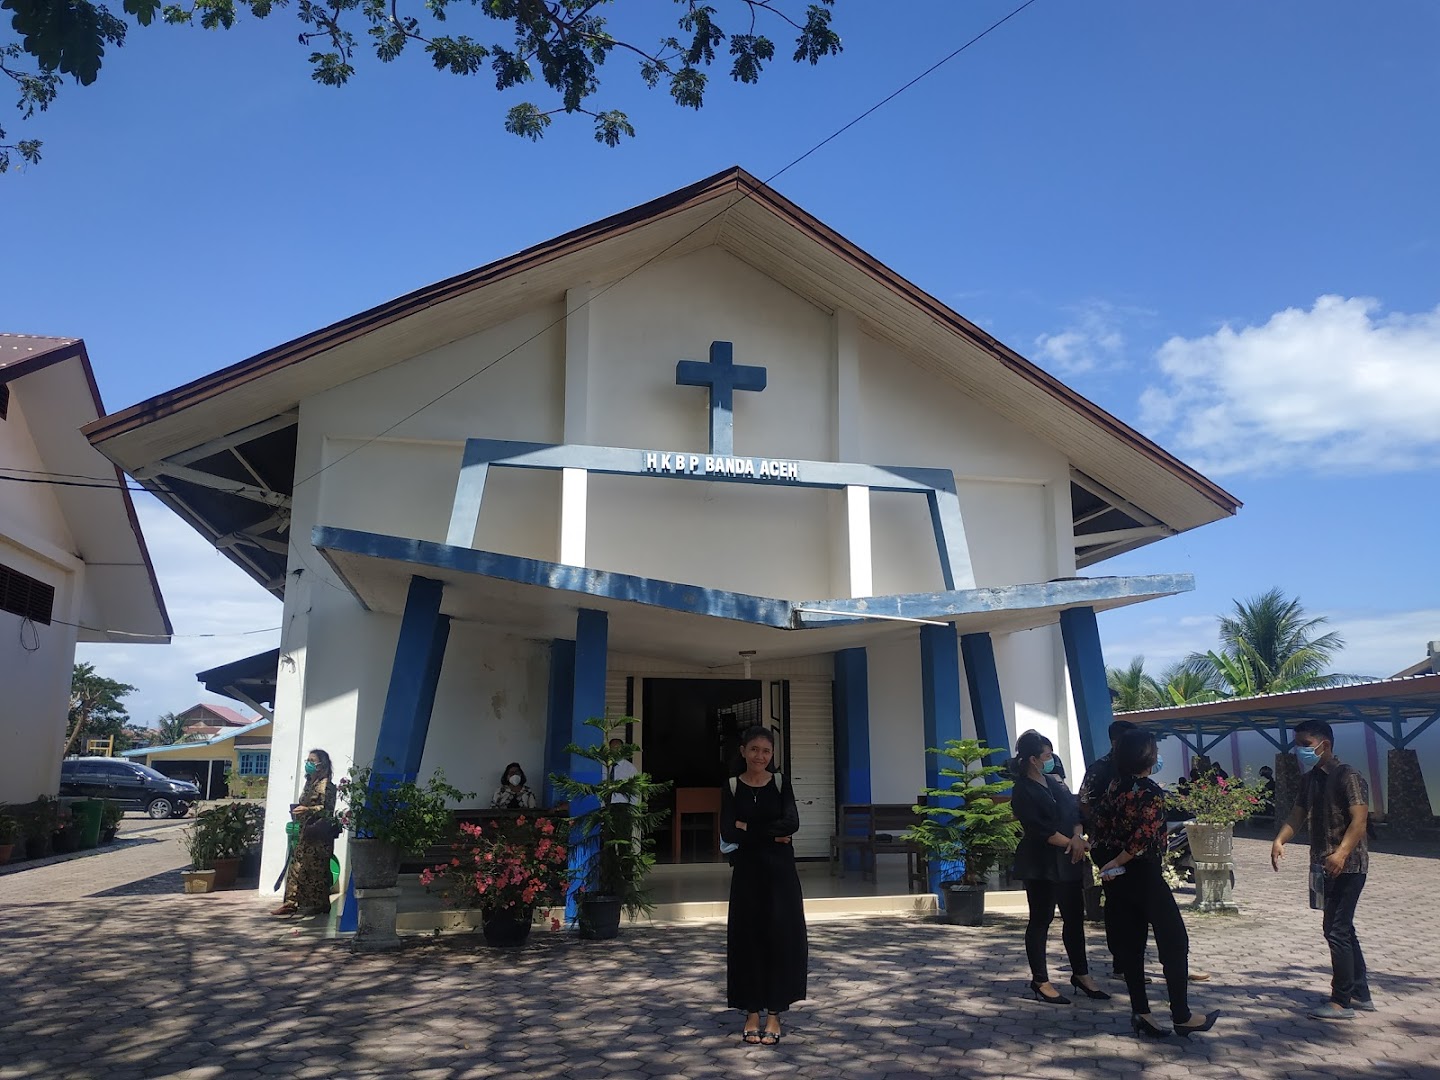 Gereja Hkbp Banda Aceh Photo